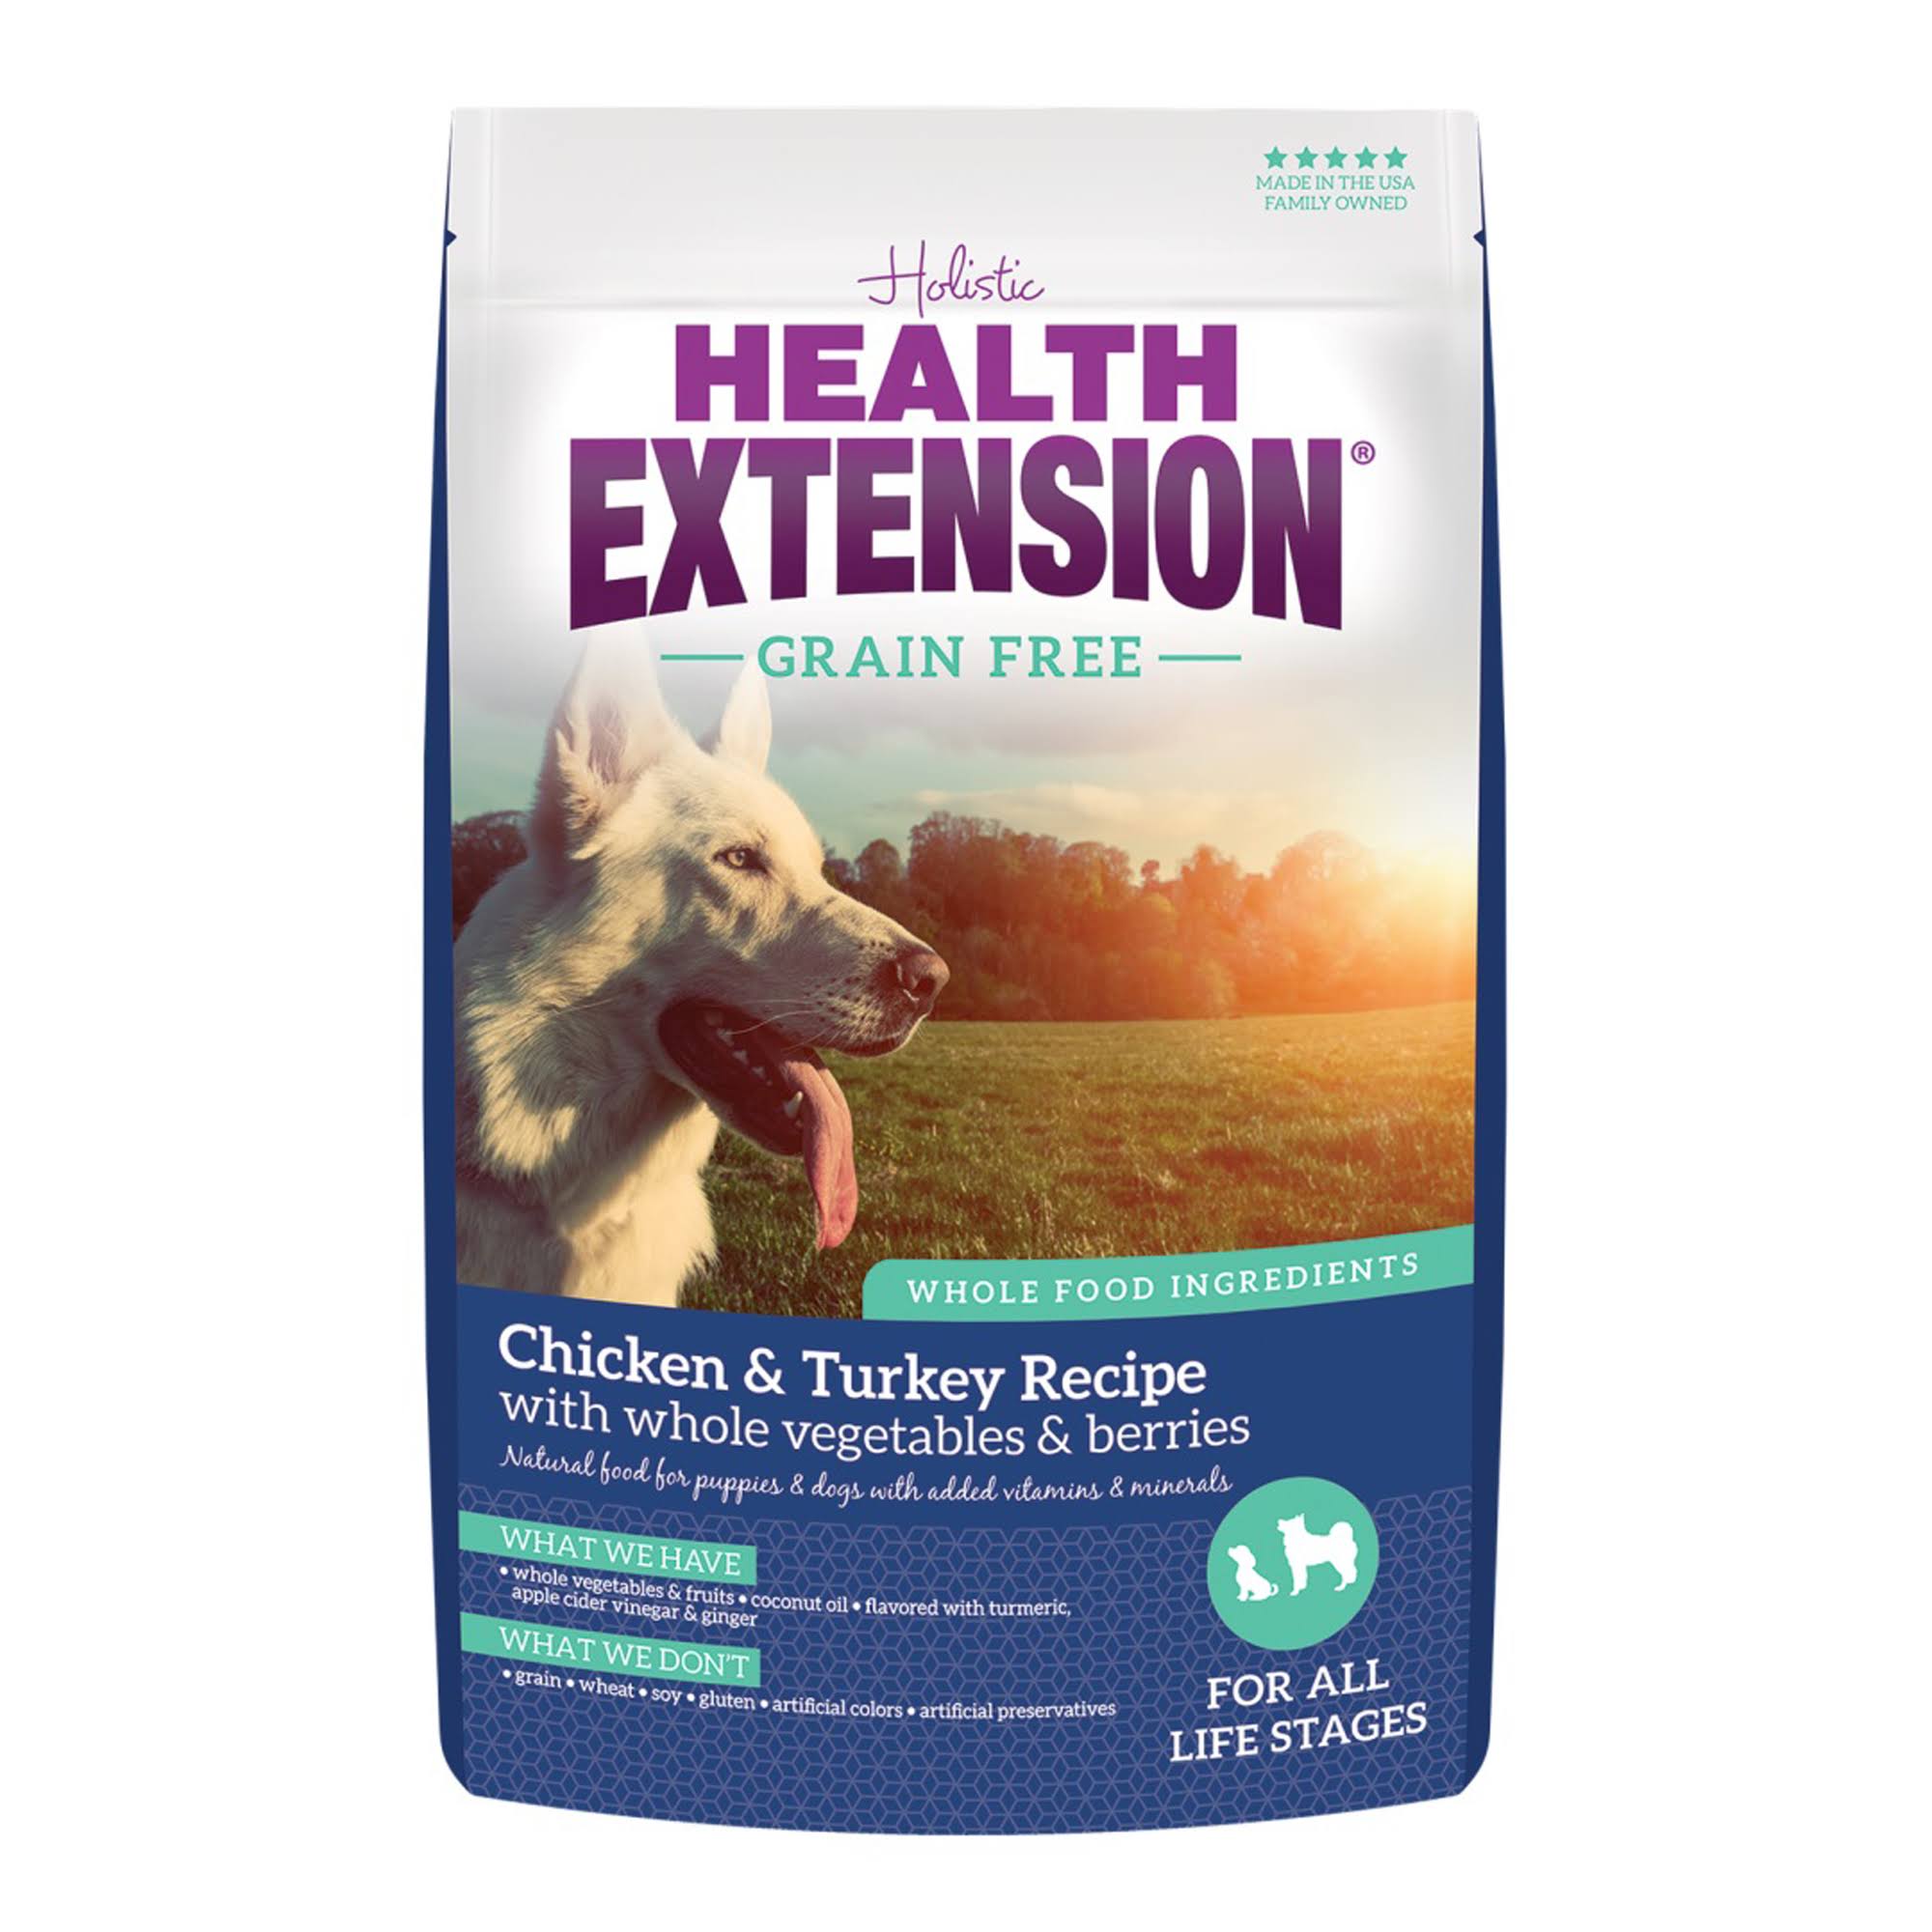 Health Extension Grain Free Formula Dog Food - 23.5lb